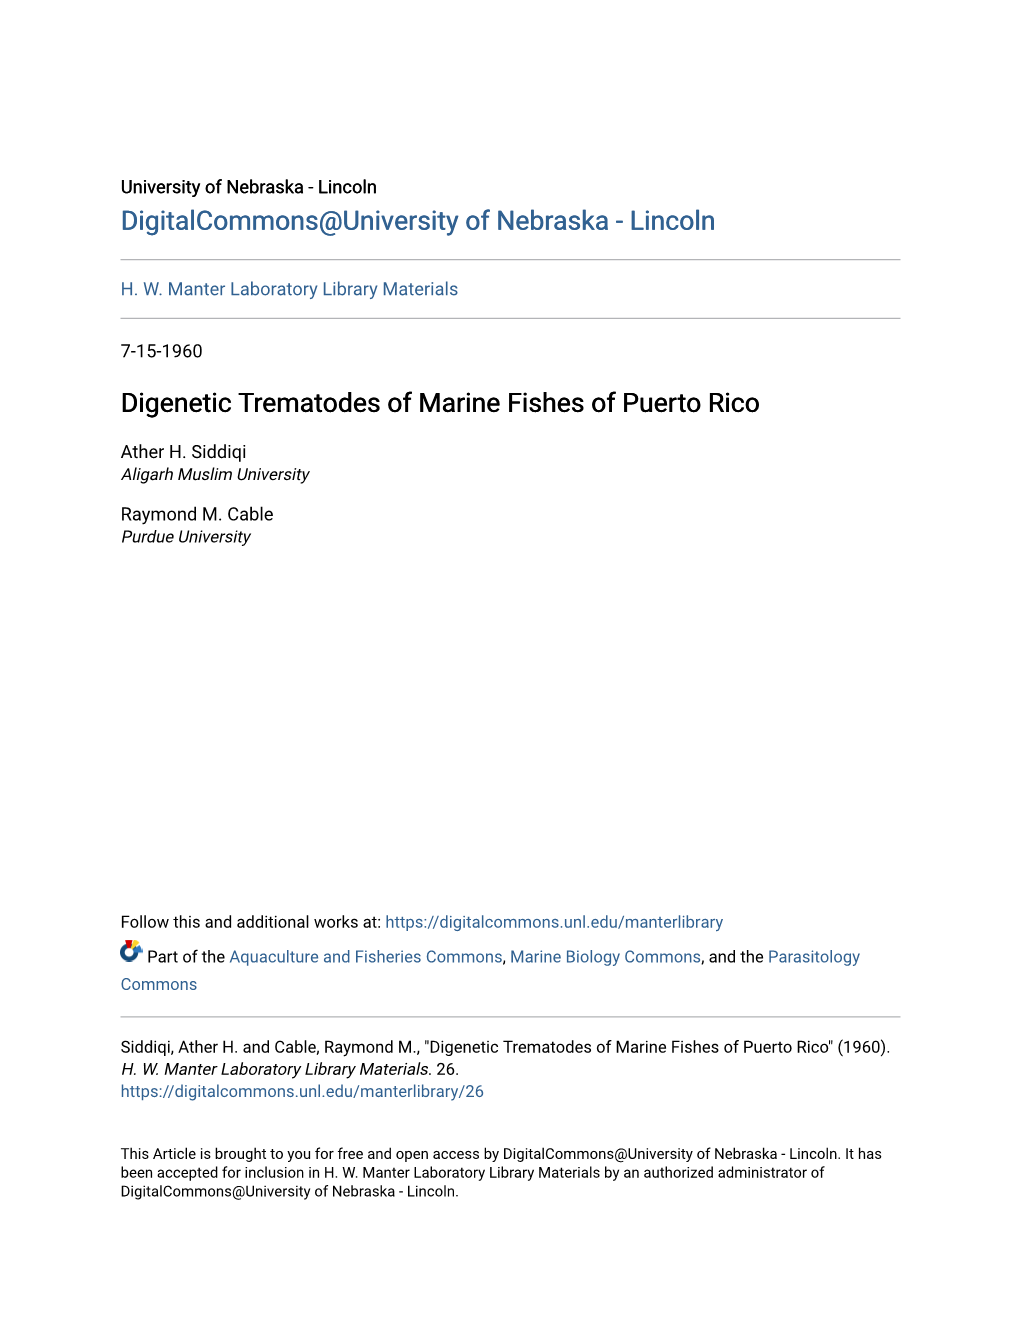 Digenetic Trematodes of Marine Fishes of Puerto Rico